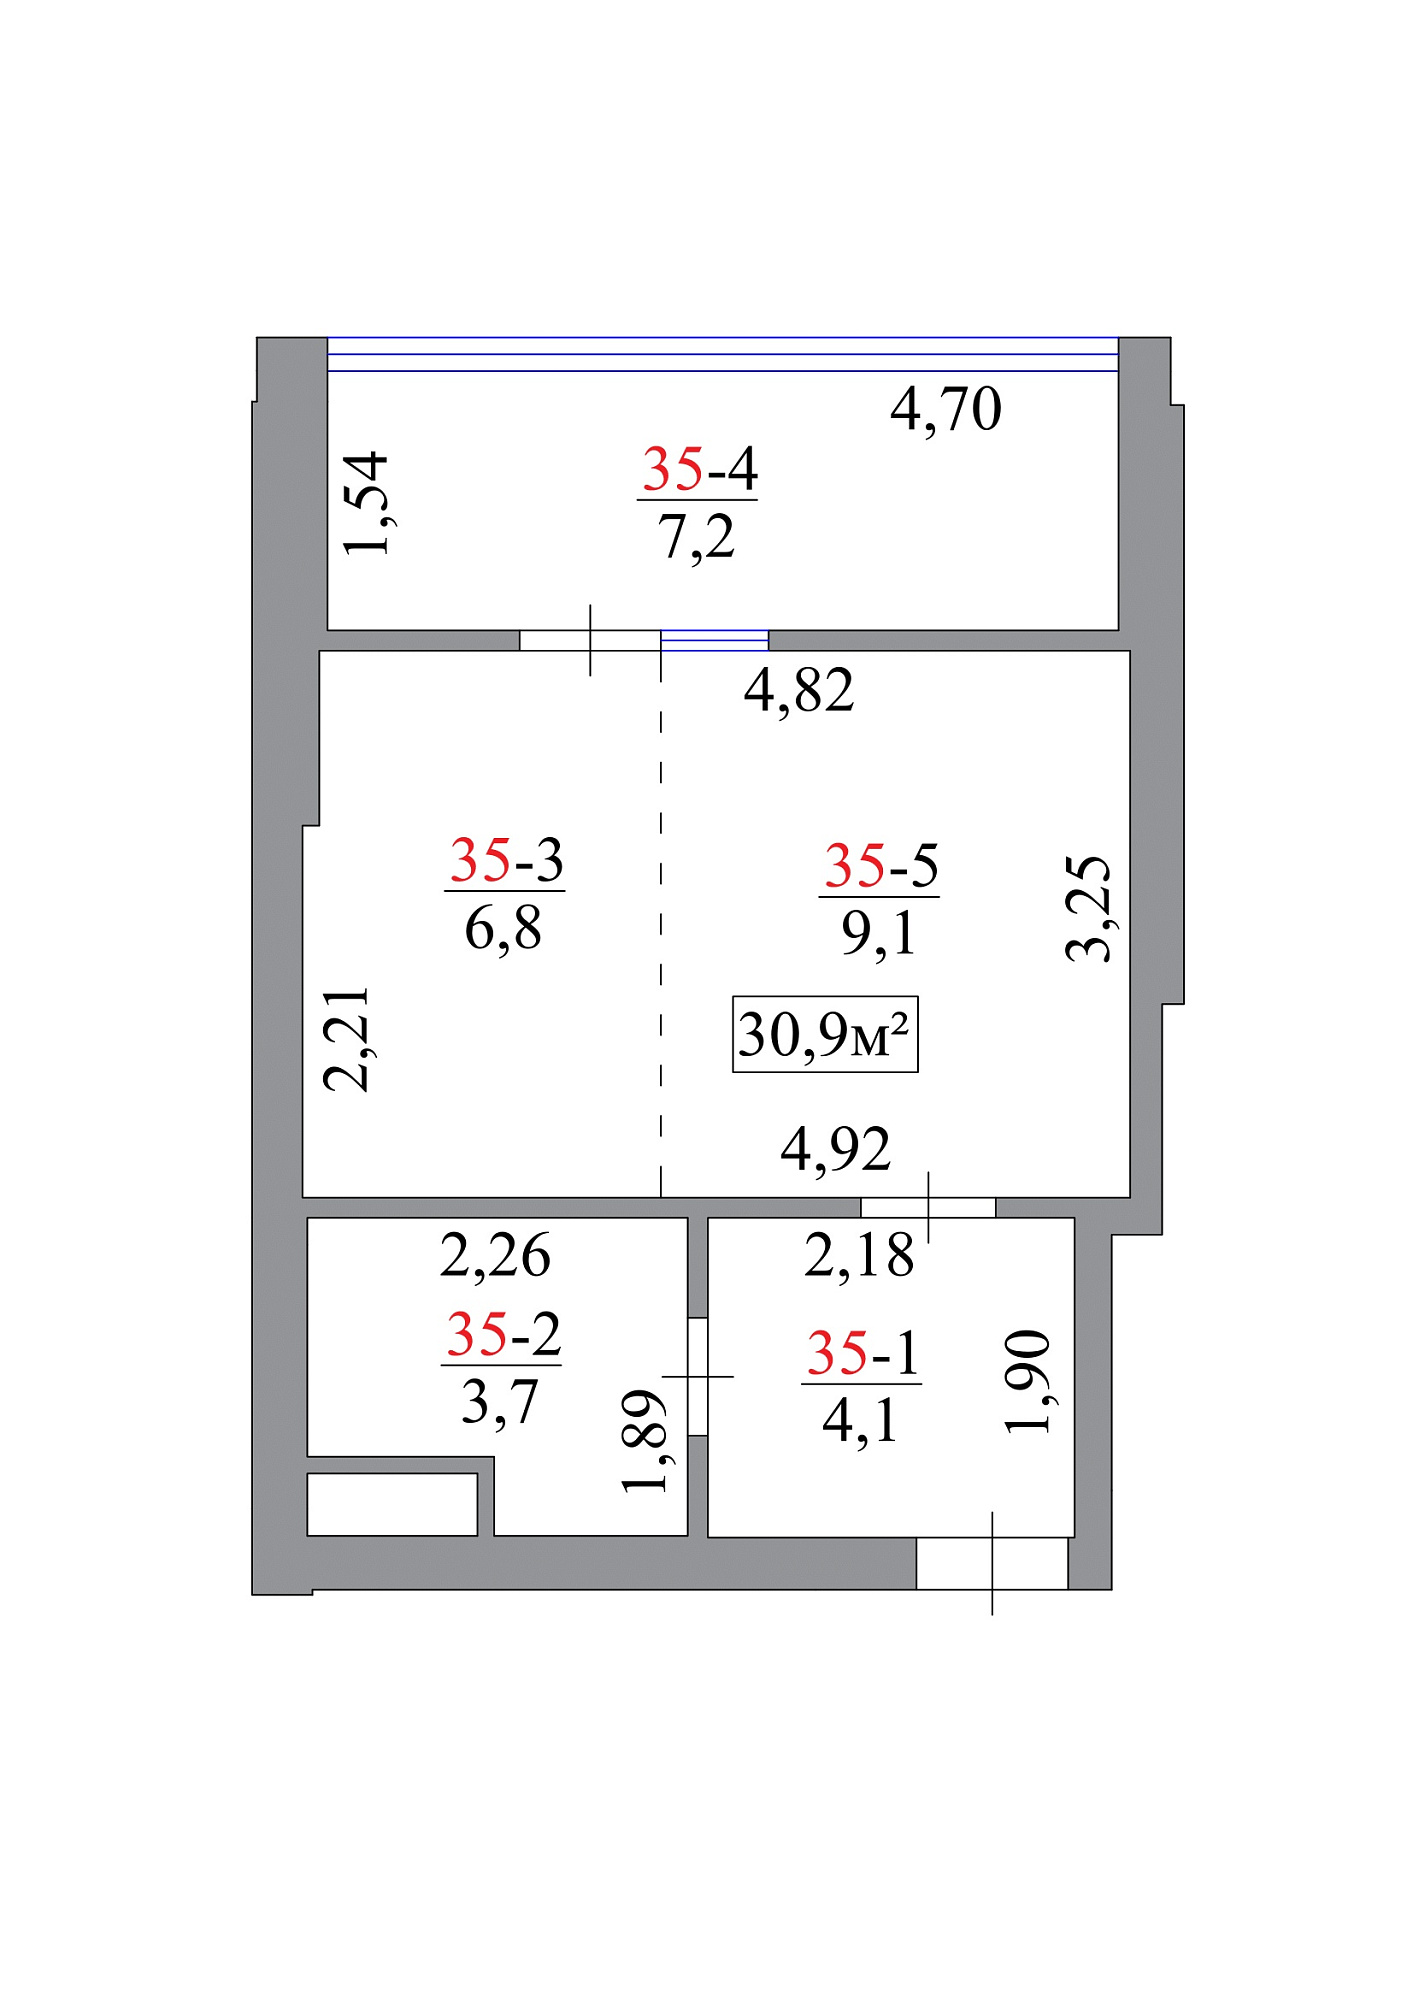 Planning Smart flats area 30.9m2, AB-07-04/00032.